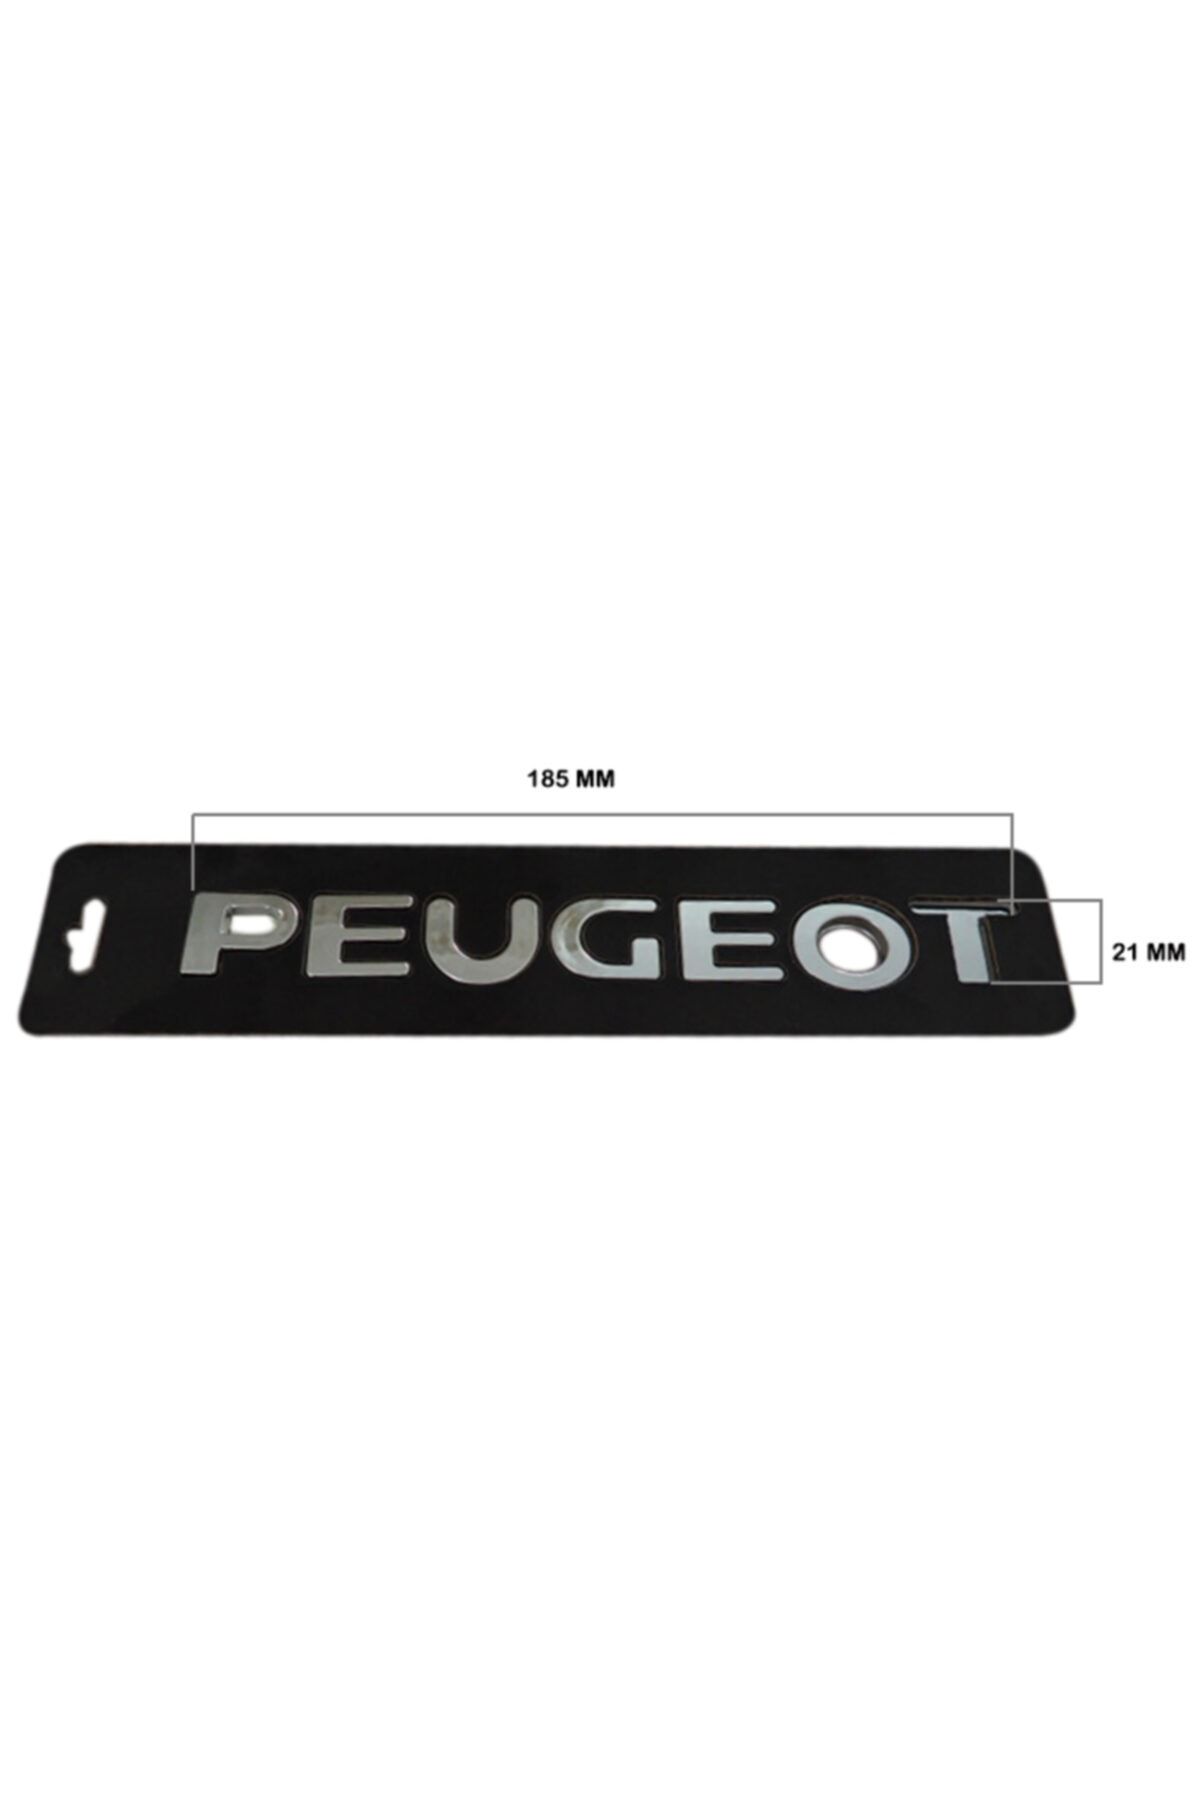 Peugeot Yazısı 185mm*21mm 8994